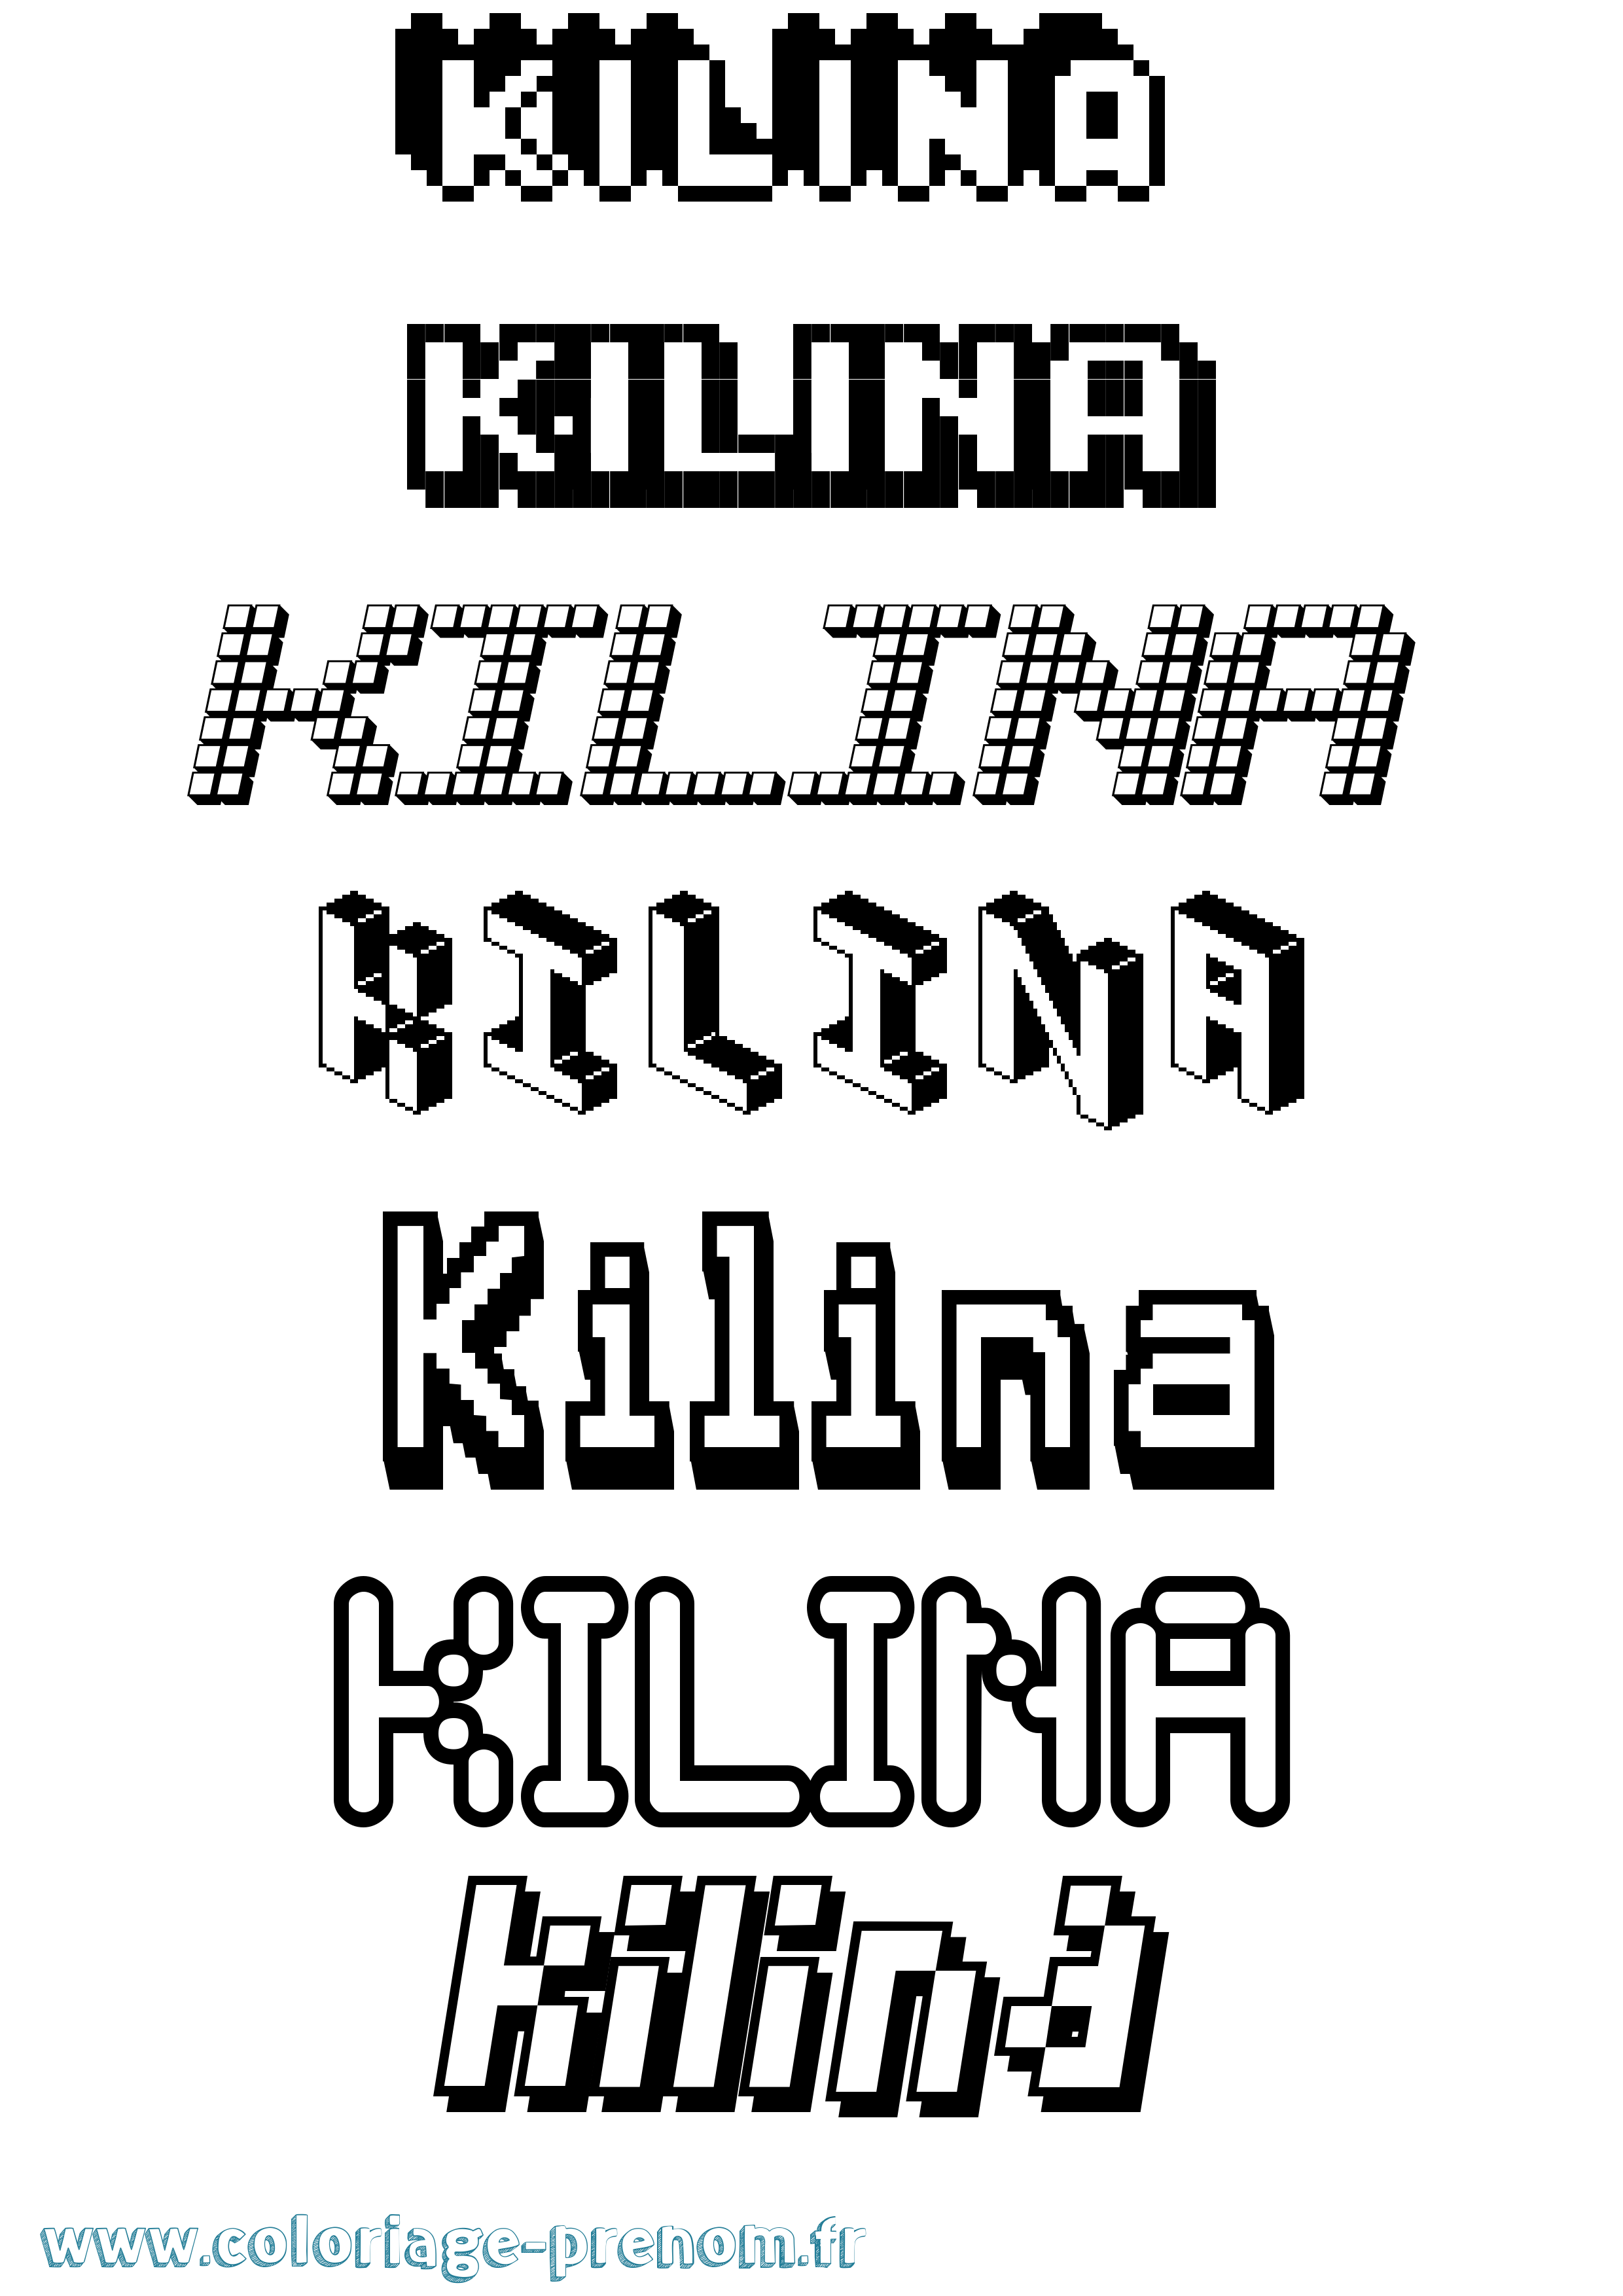 Coloriage prénom Kilina Pixel